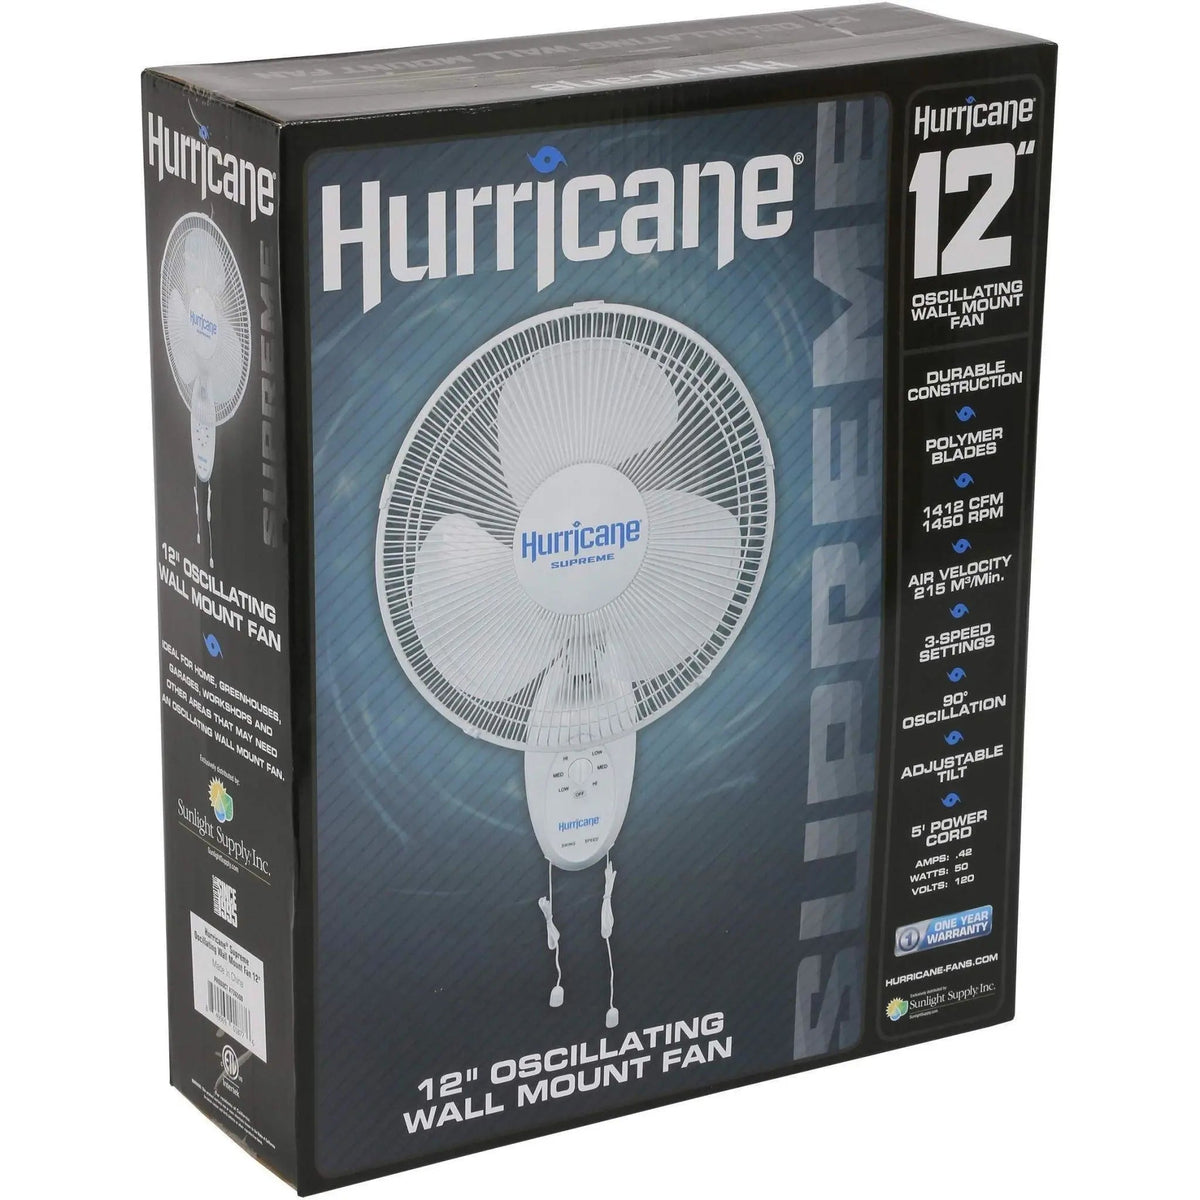 Hurricane® Supreme Oscillating Wall Mount Fan, 12" Hurricane